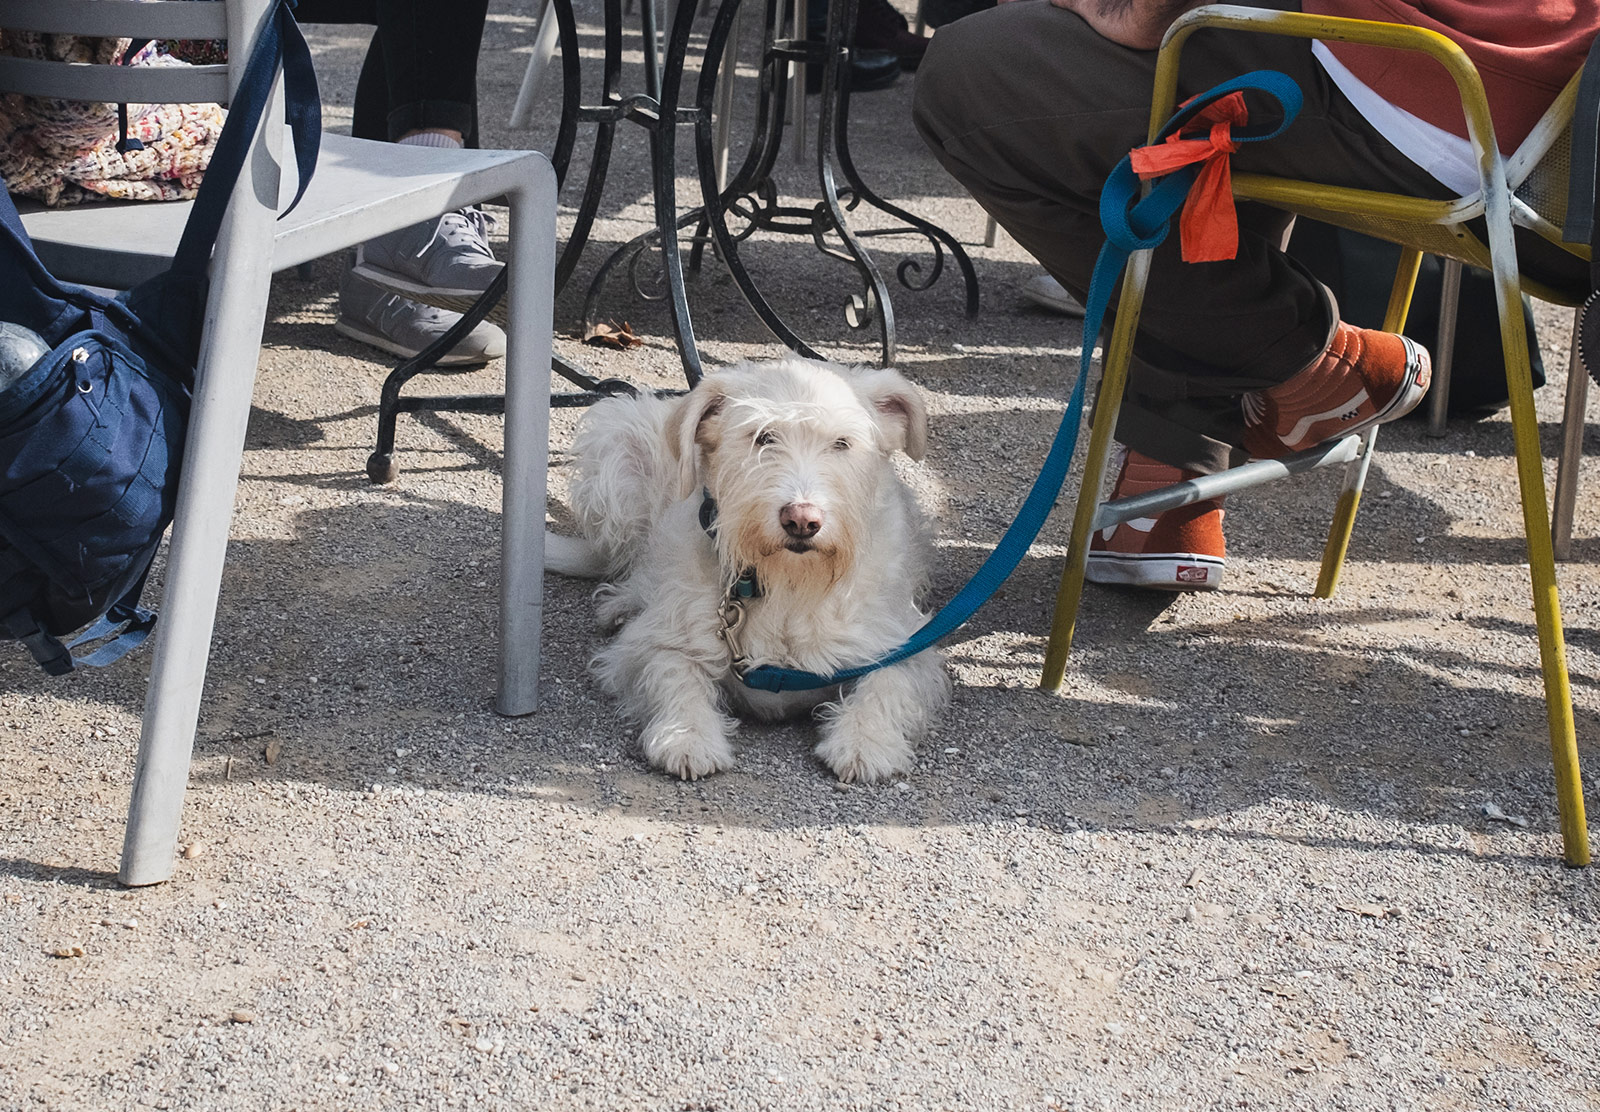 Dog sat under table